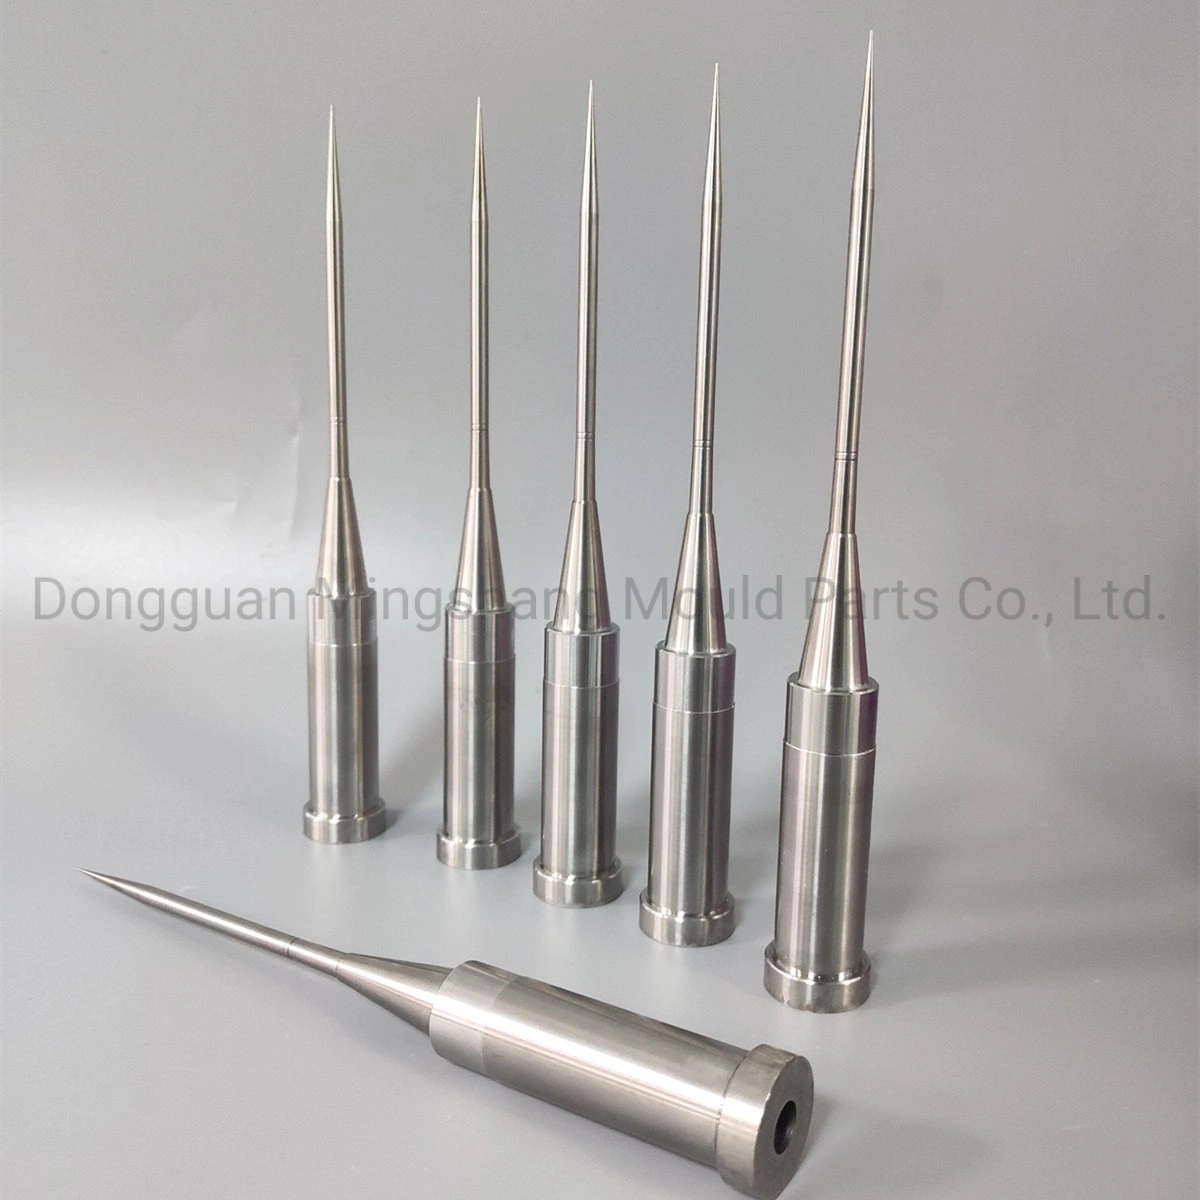 High Precision SKD61 العمل الساخن Die Steel Core Pins مع نيتركس لمولد حقن البلاستيك الطبي